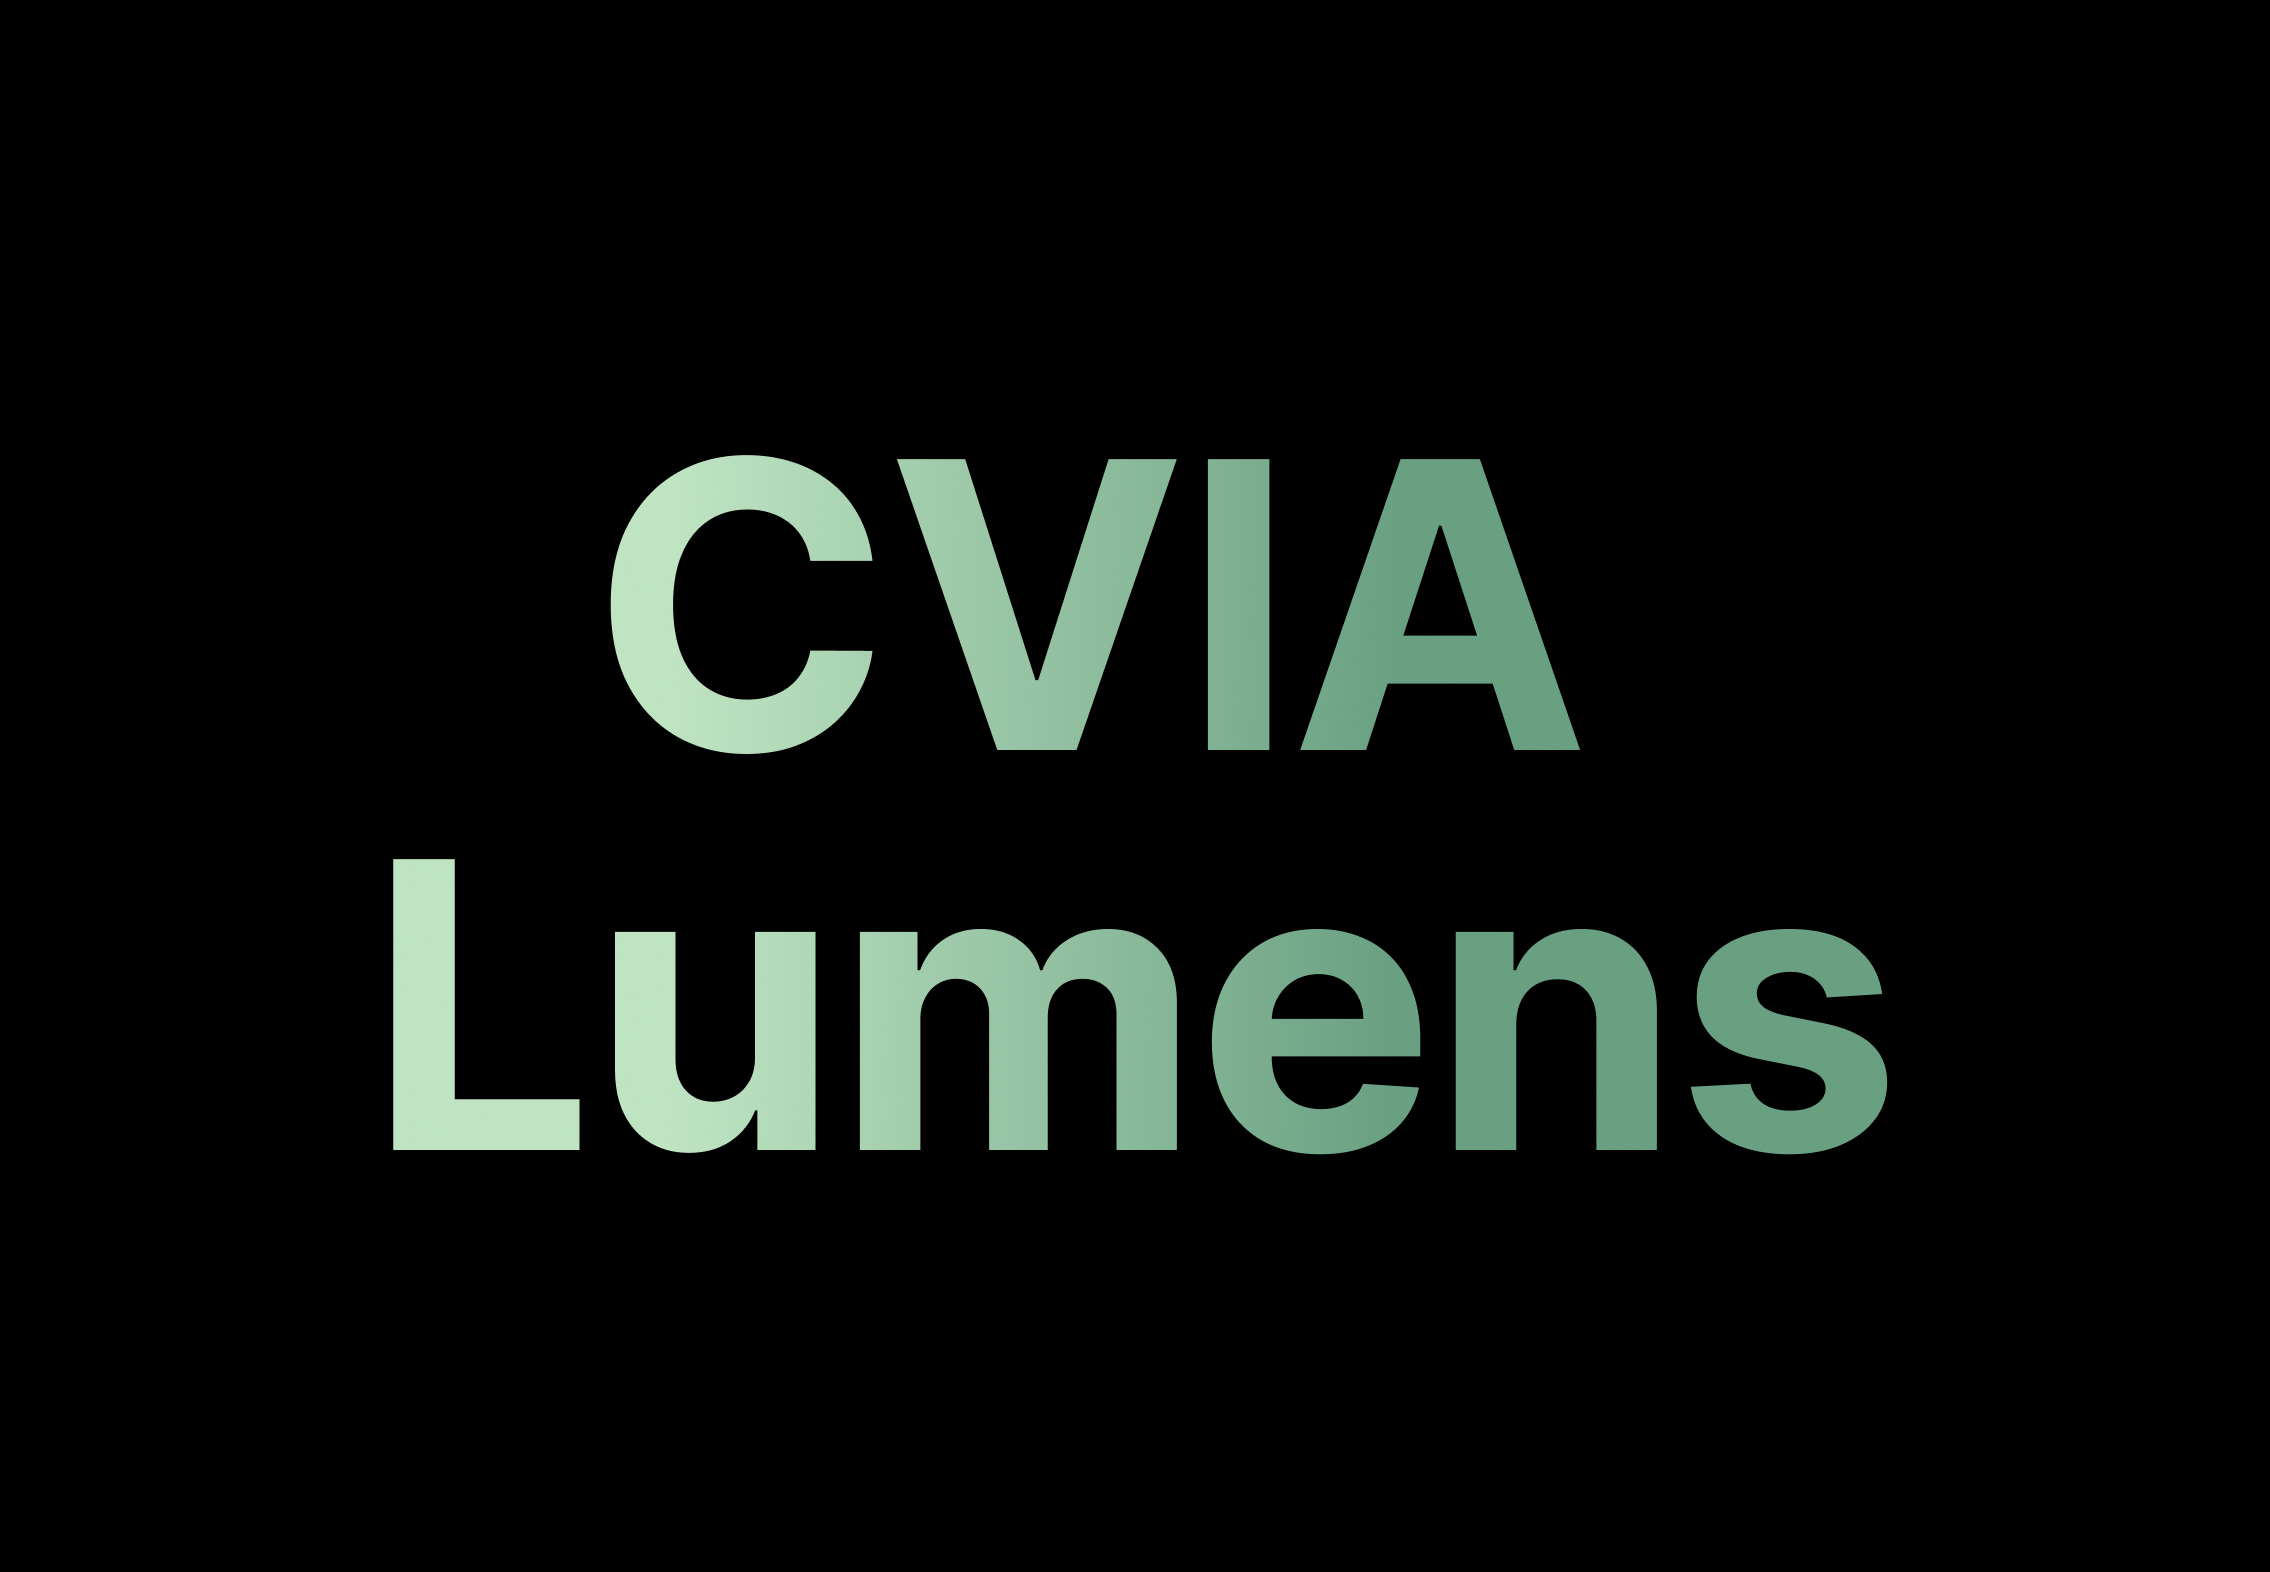 CVIA Lumens vs ANSI Lumens